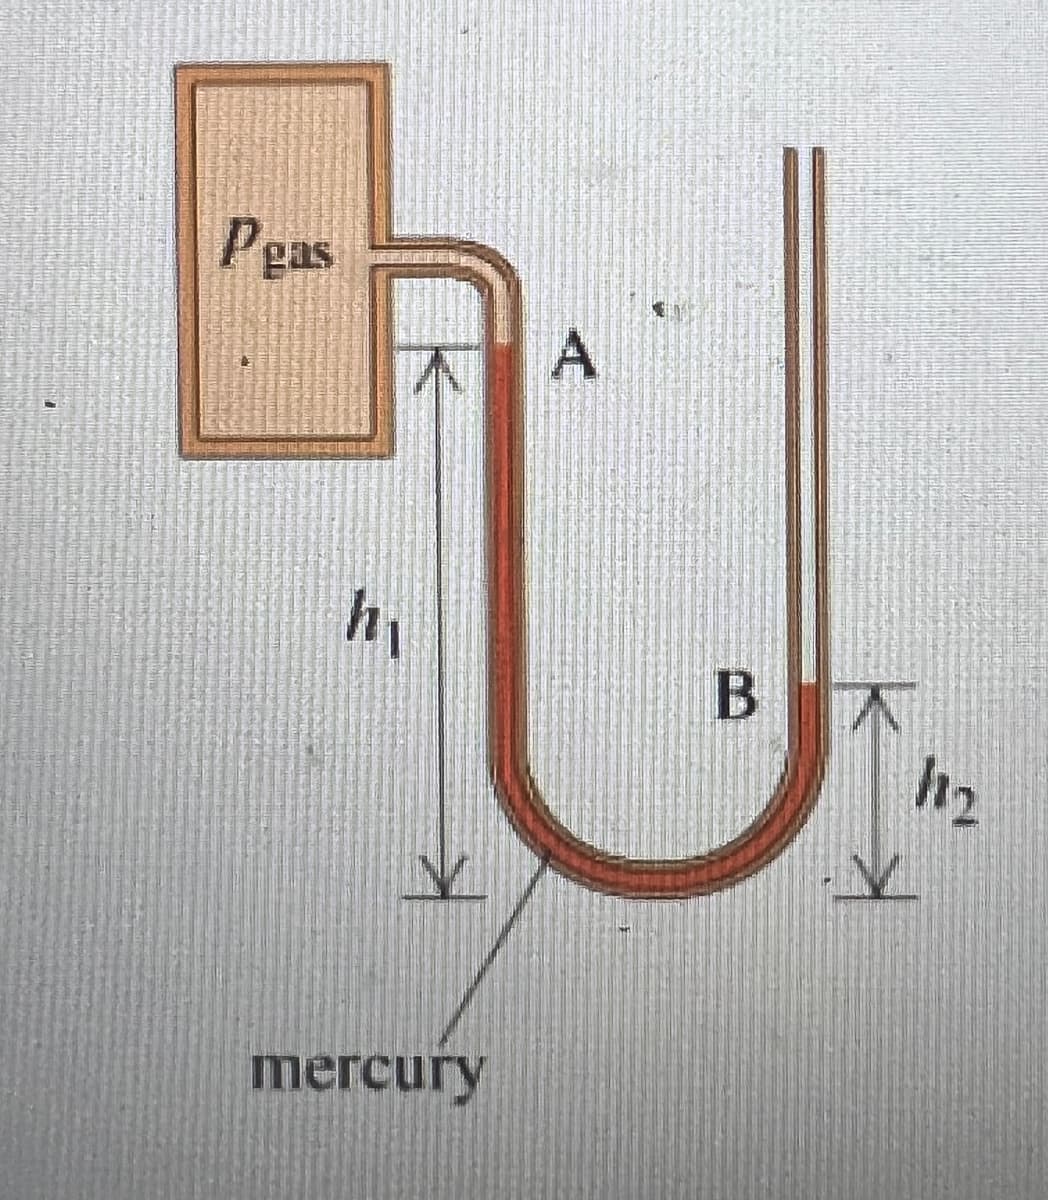 Peas
mercury
A
B
12